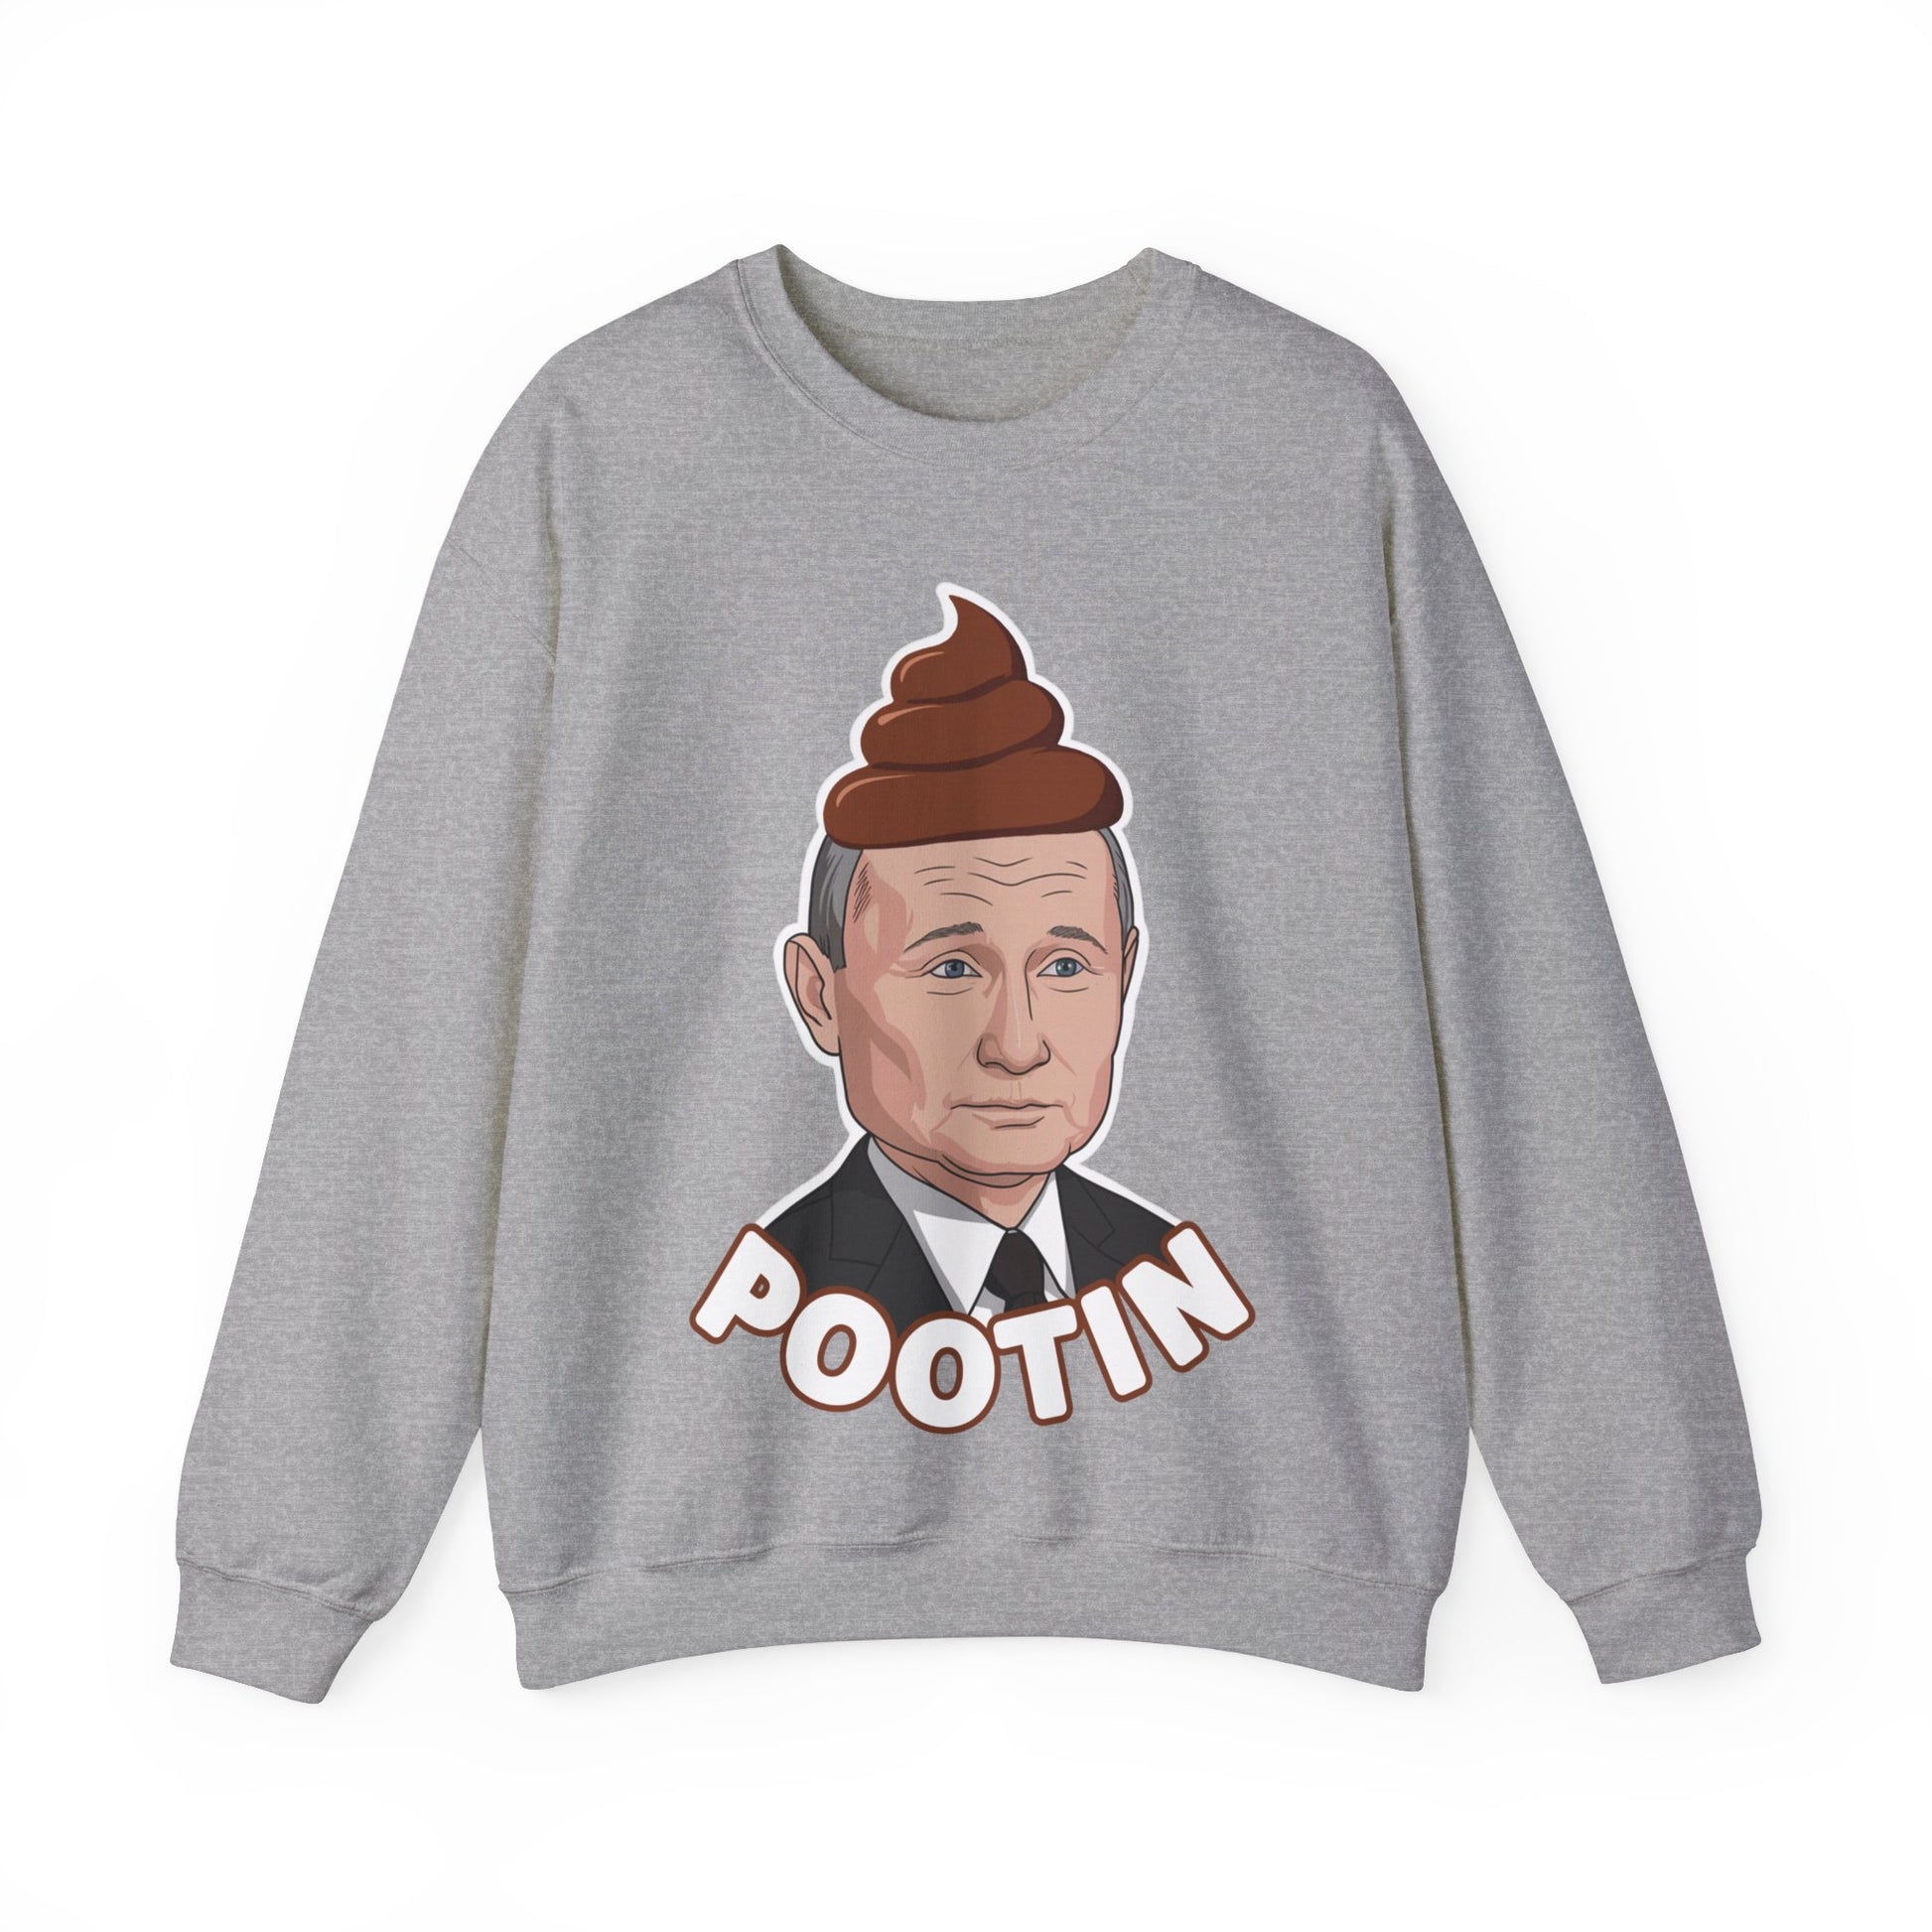 Pootin Funny Anti Vladimir Putin Unisex Heavy Blend Crewneck Sweatshirt Next Cult Brand